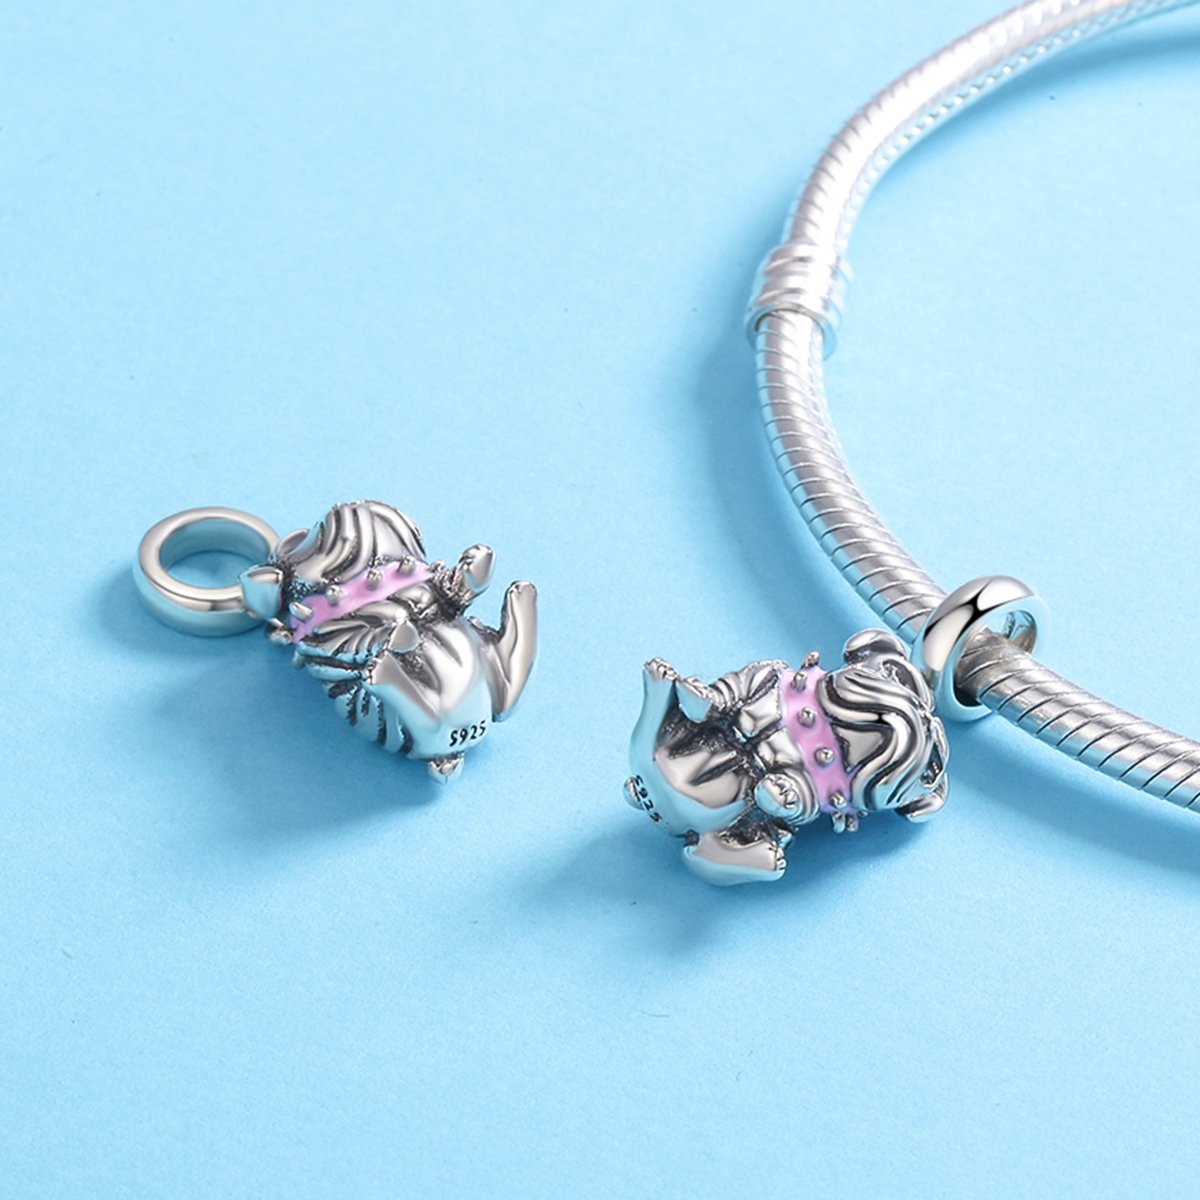 Sterling 925 silver charm the Shar Pei dog bead pendant fits Pandora charm and European charm bracelet Xaxe.com